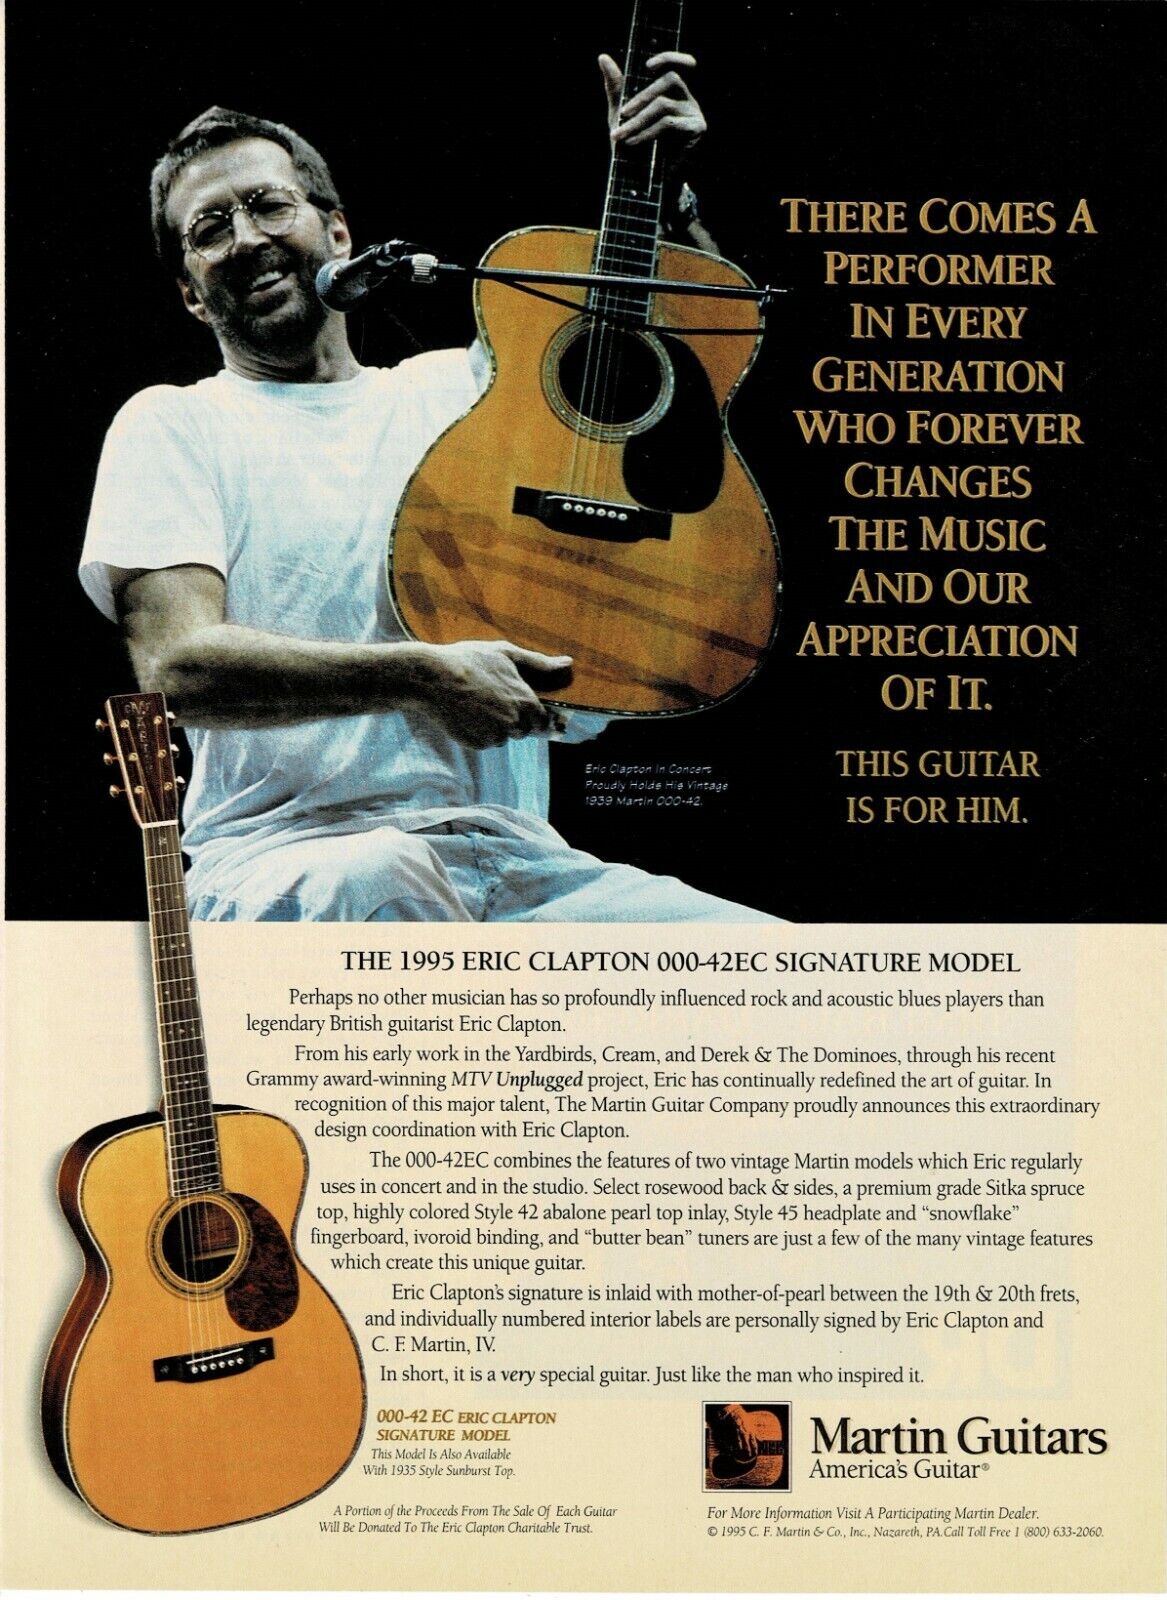 Martin & Co Guitars - Eric Clapton Signature 000-42EC - 1995 Print Advertisement